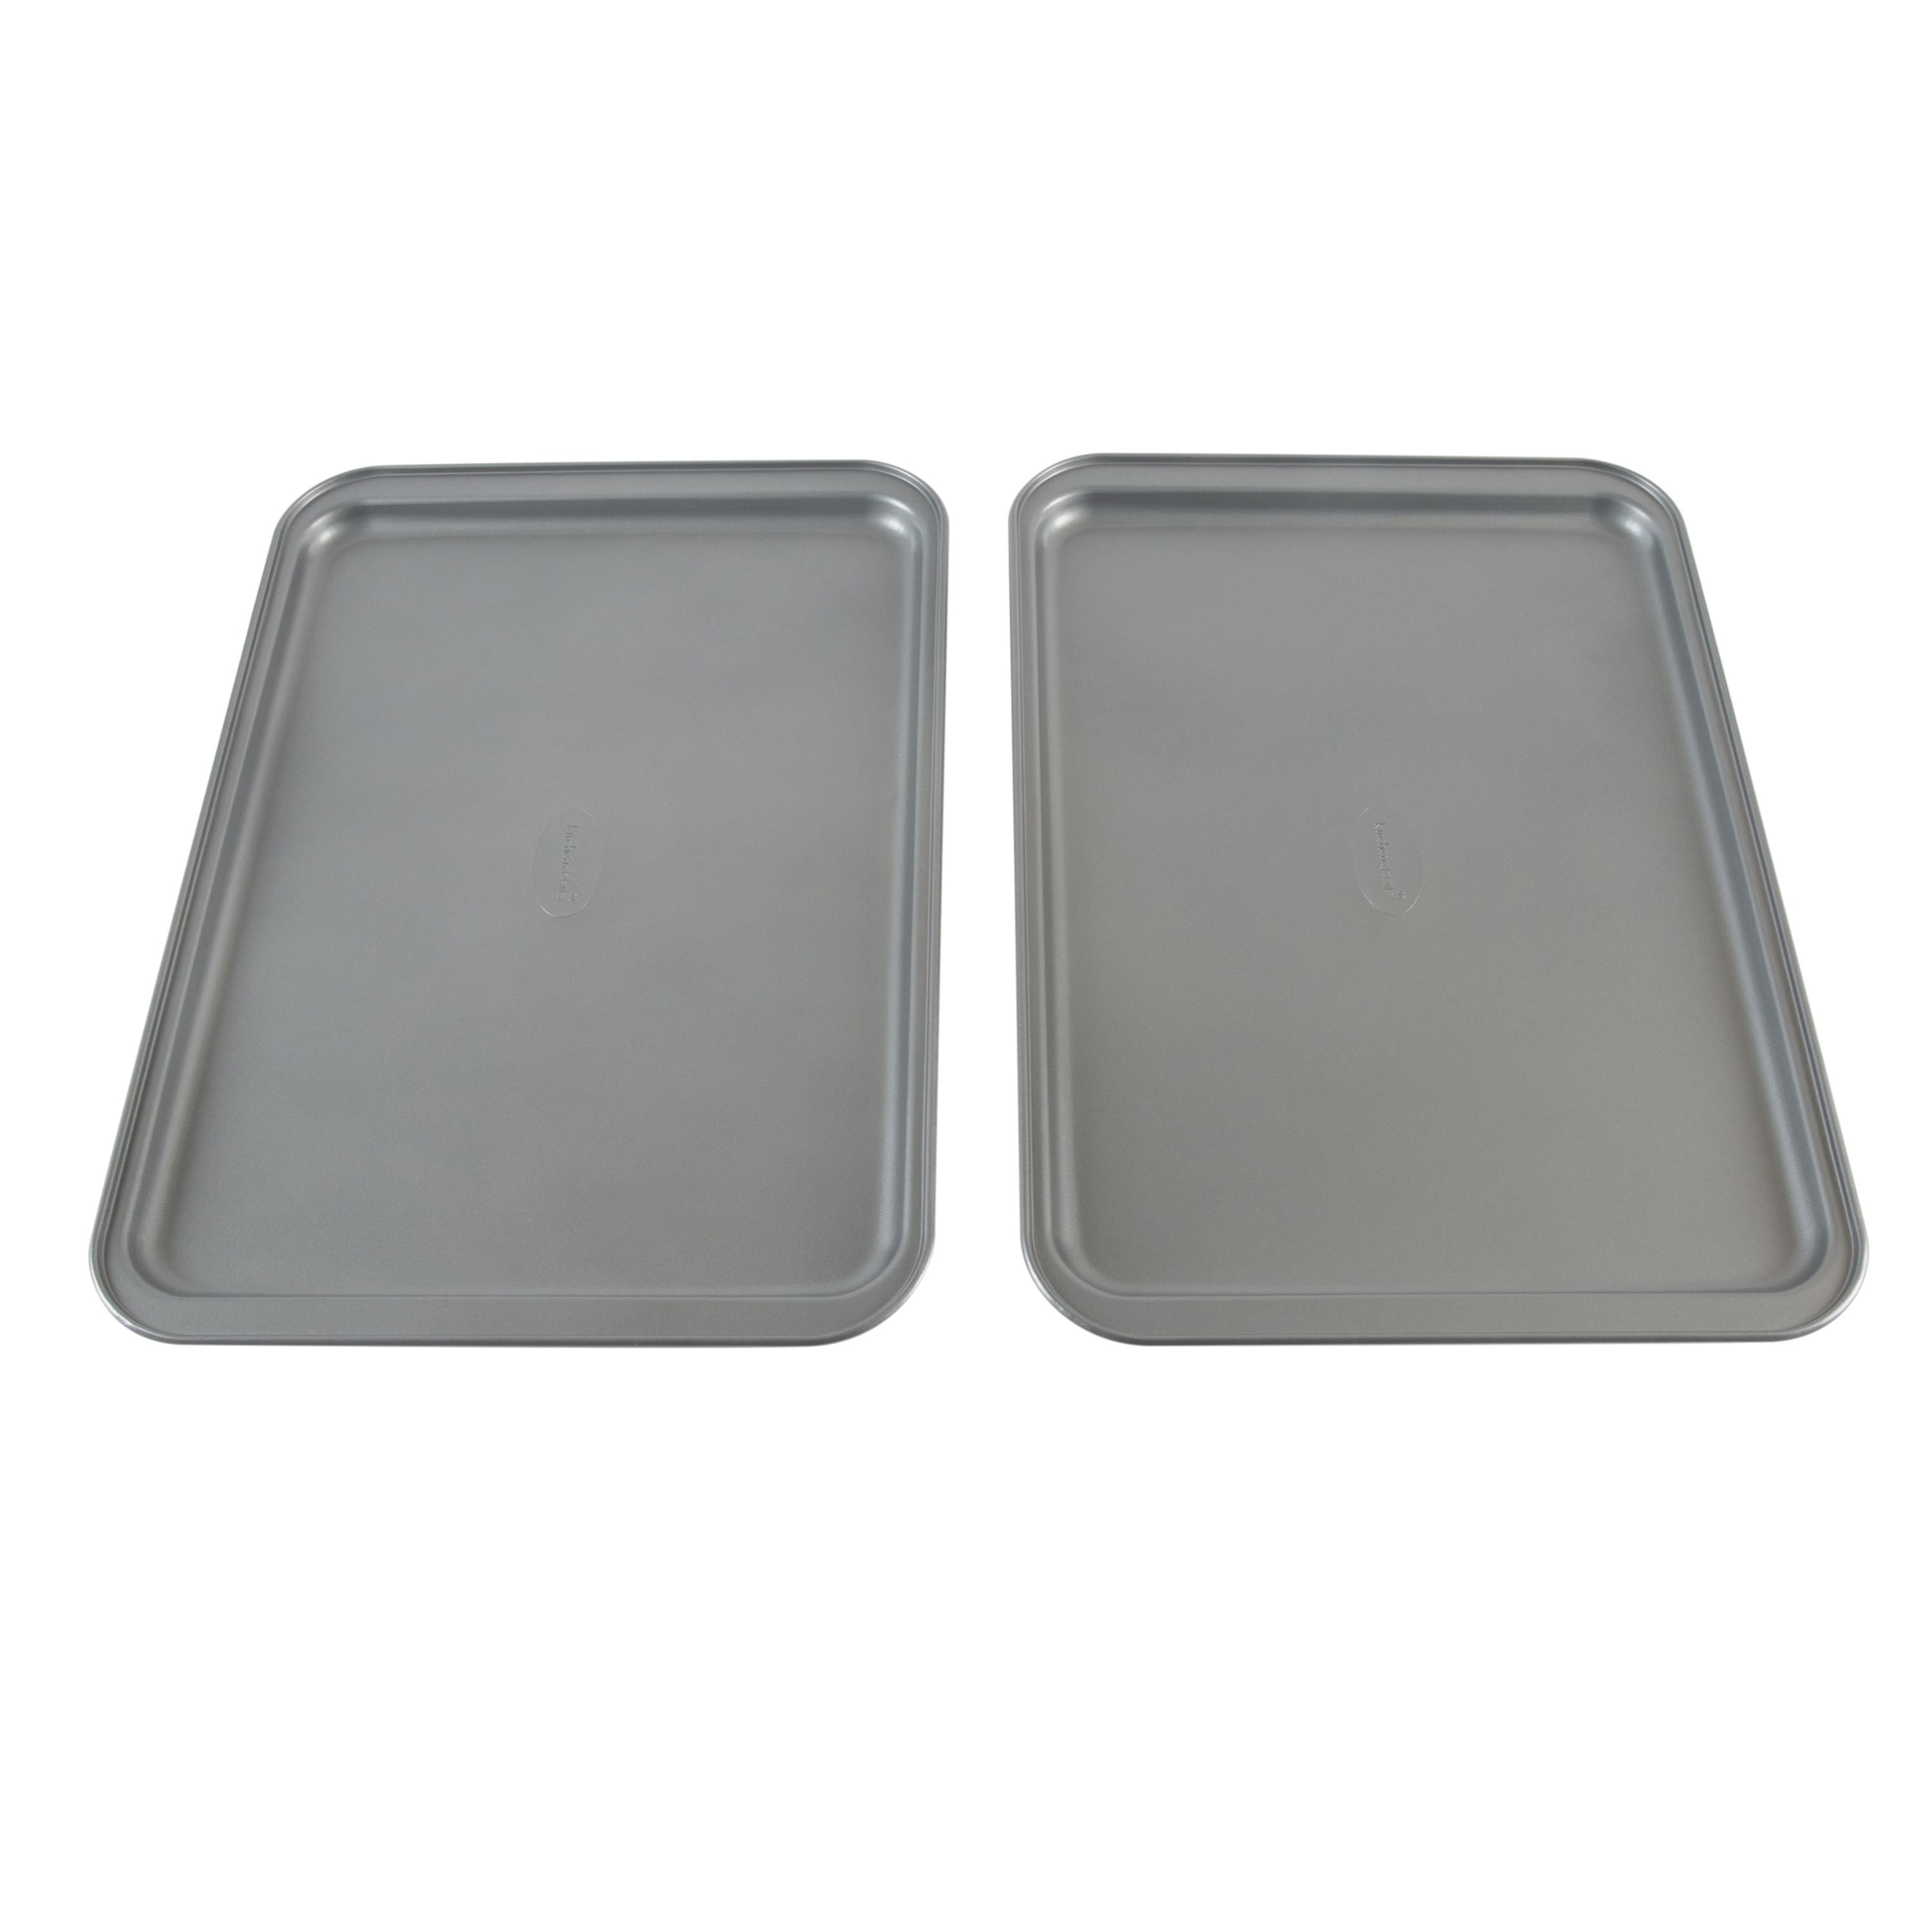 Joytable Aluminum Steel Non-Stick Baking Sheet/Cookie Sheet Set - Big Sheet Pan - 6 Piece